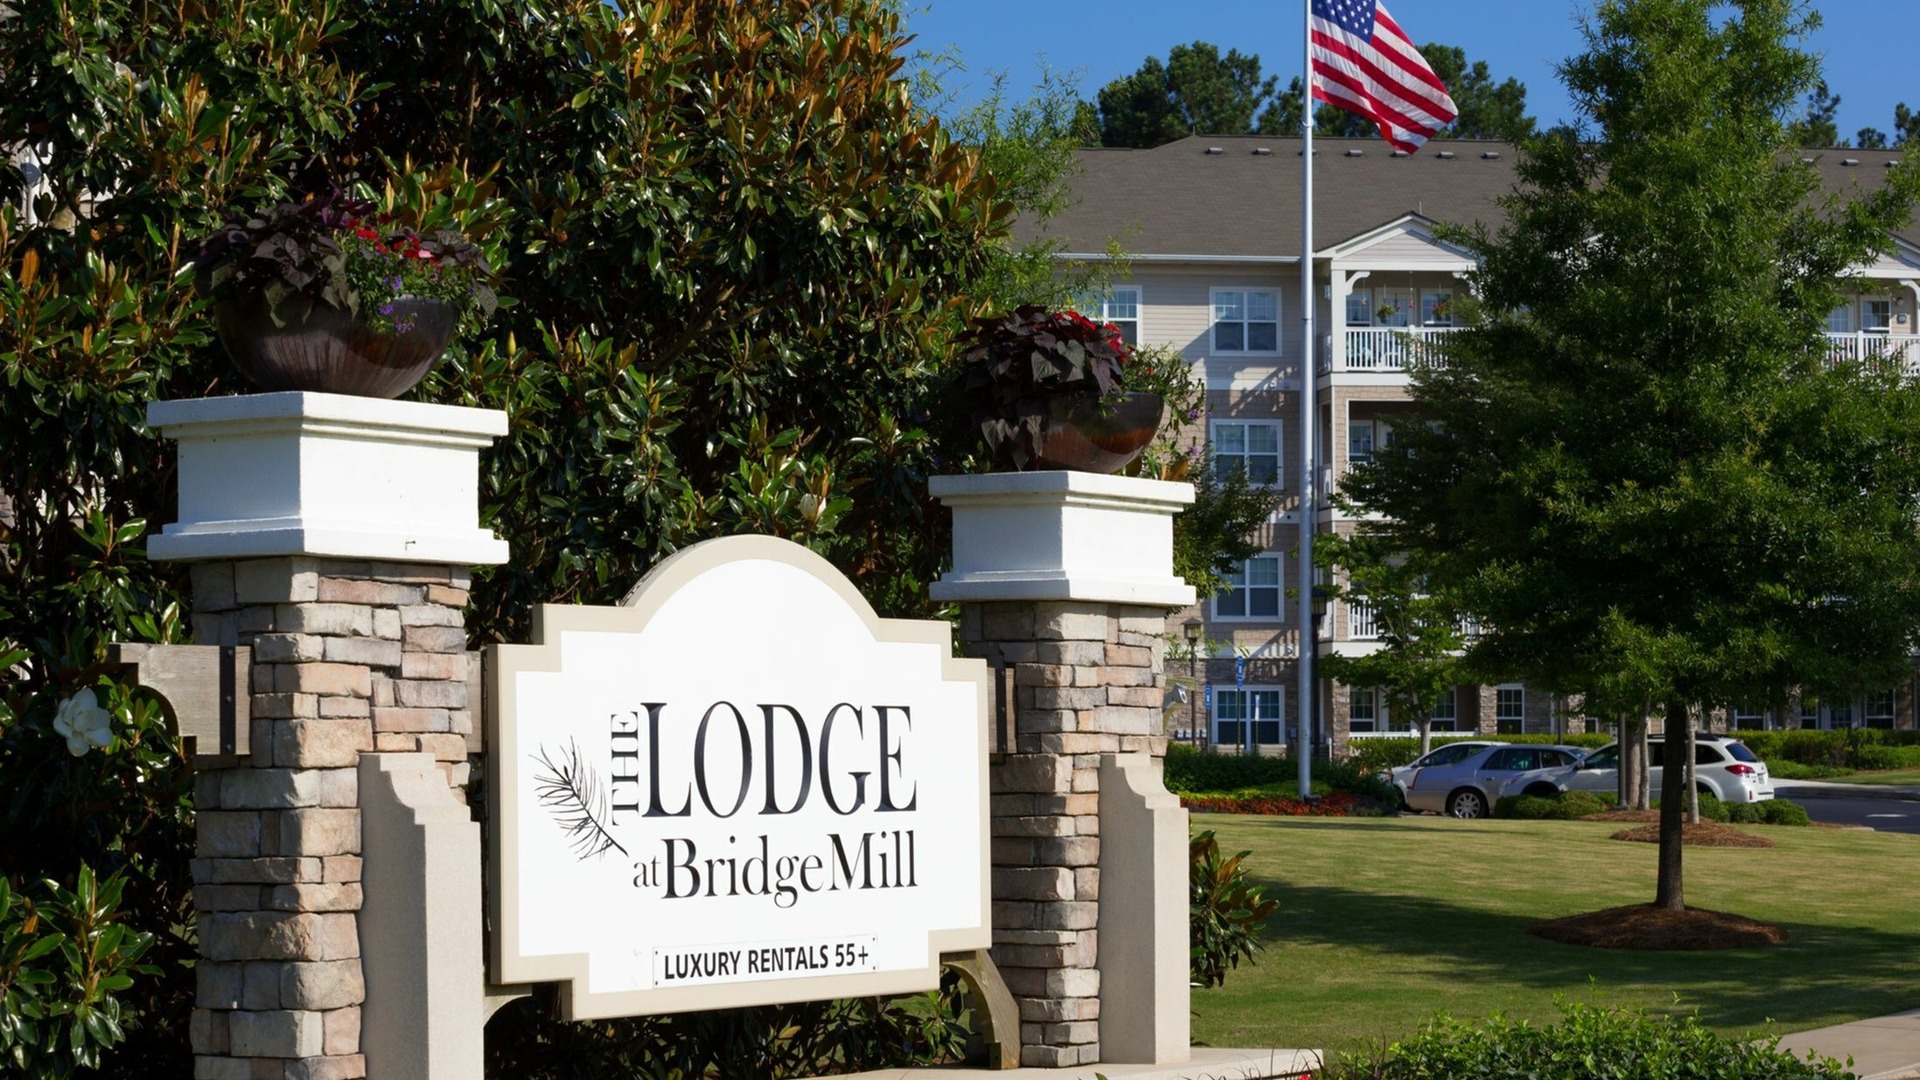 The Lodge at BridgeMill